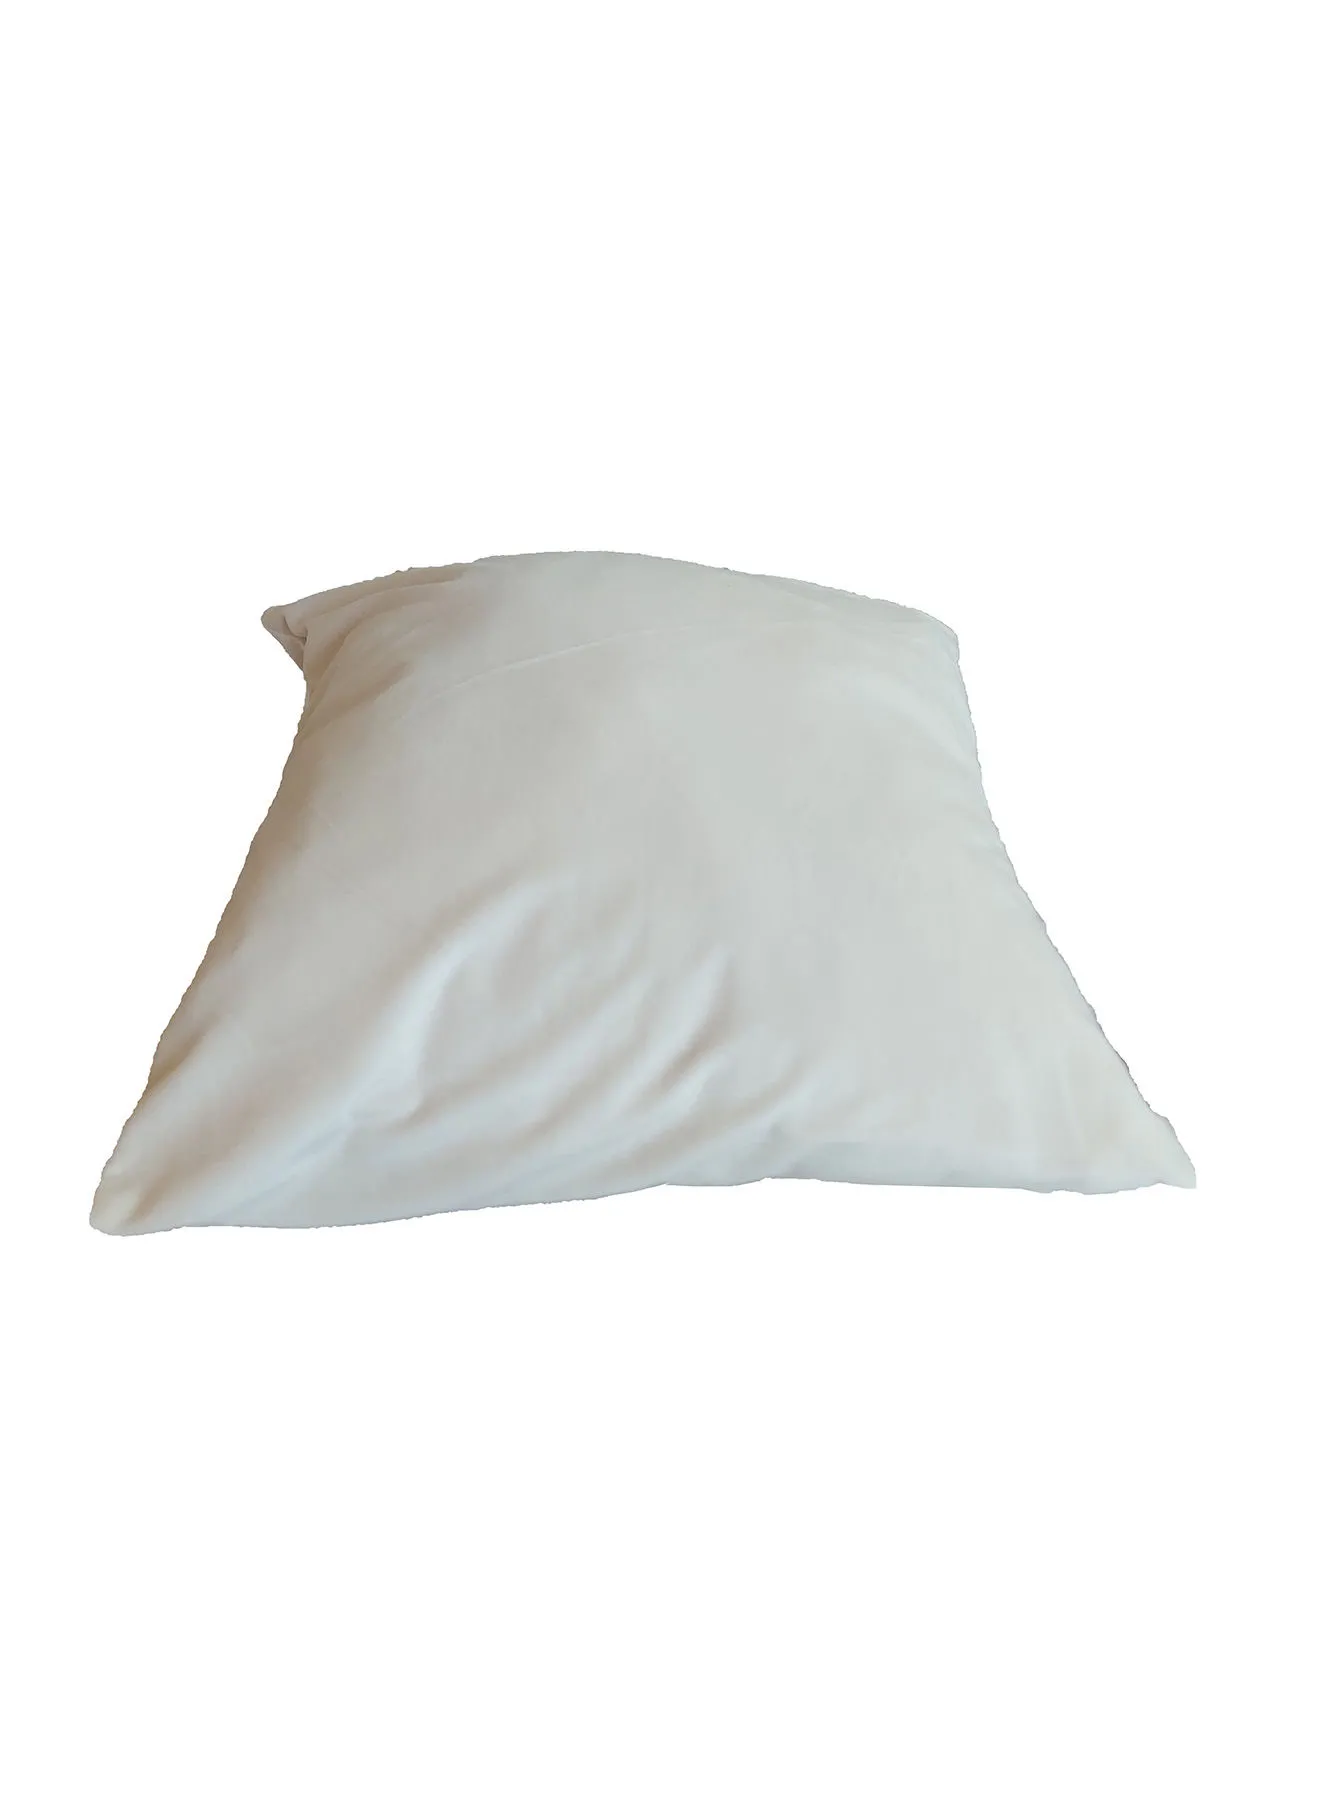 Hometown Fashionable Plain Cushion Cover Multicolor 45X45cm